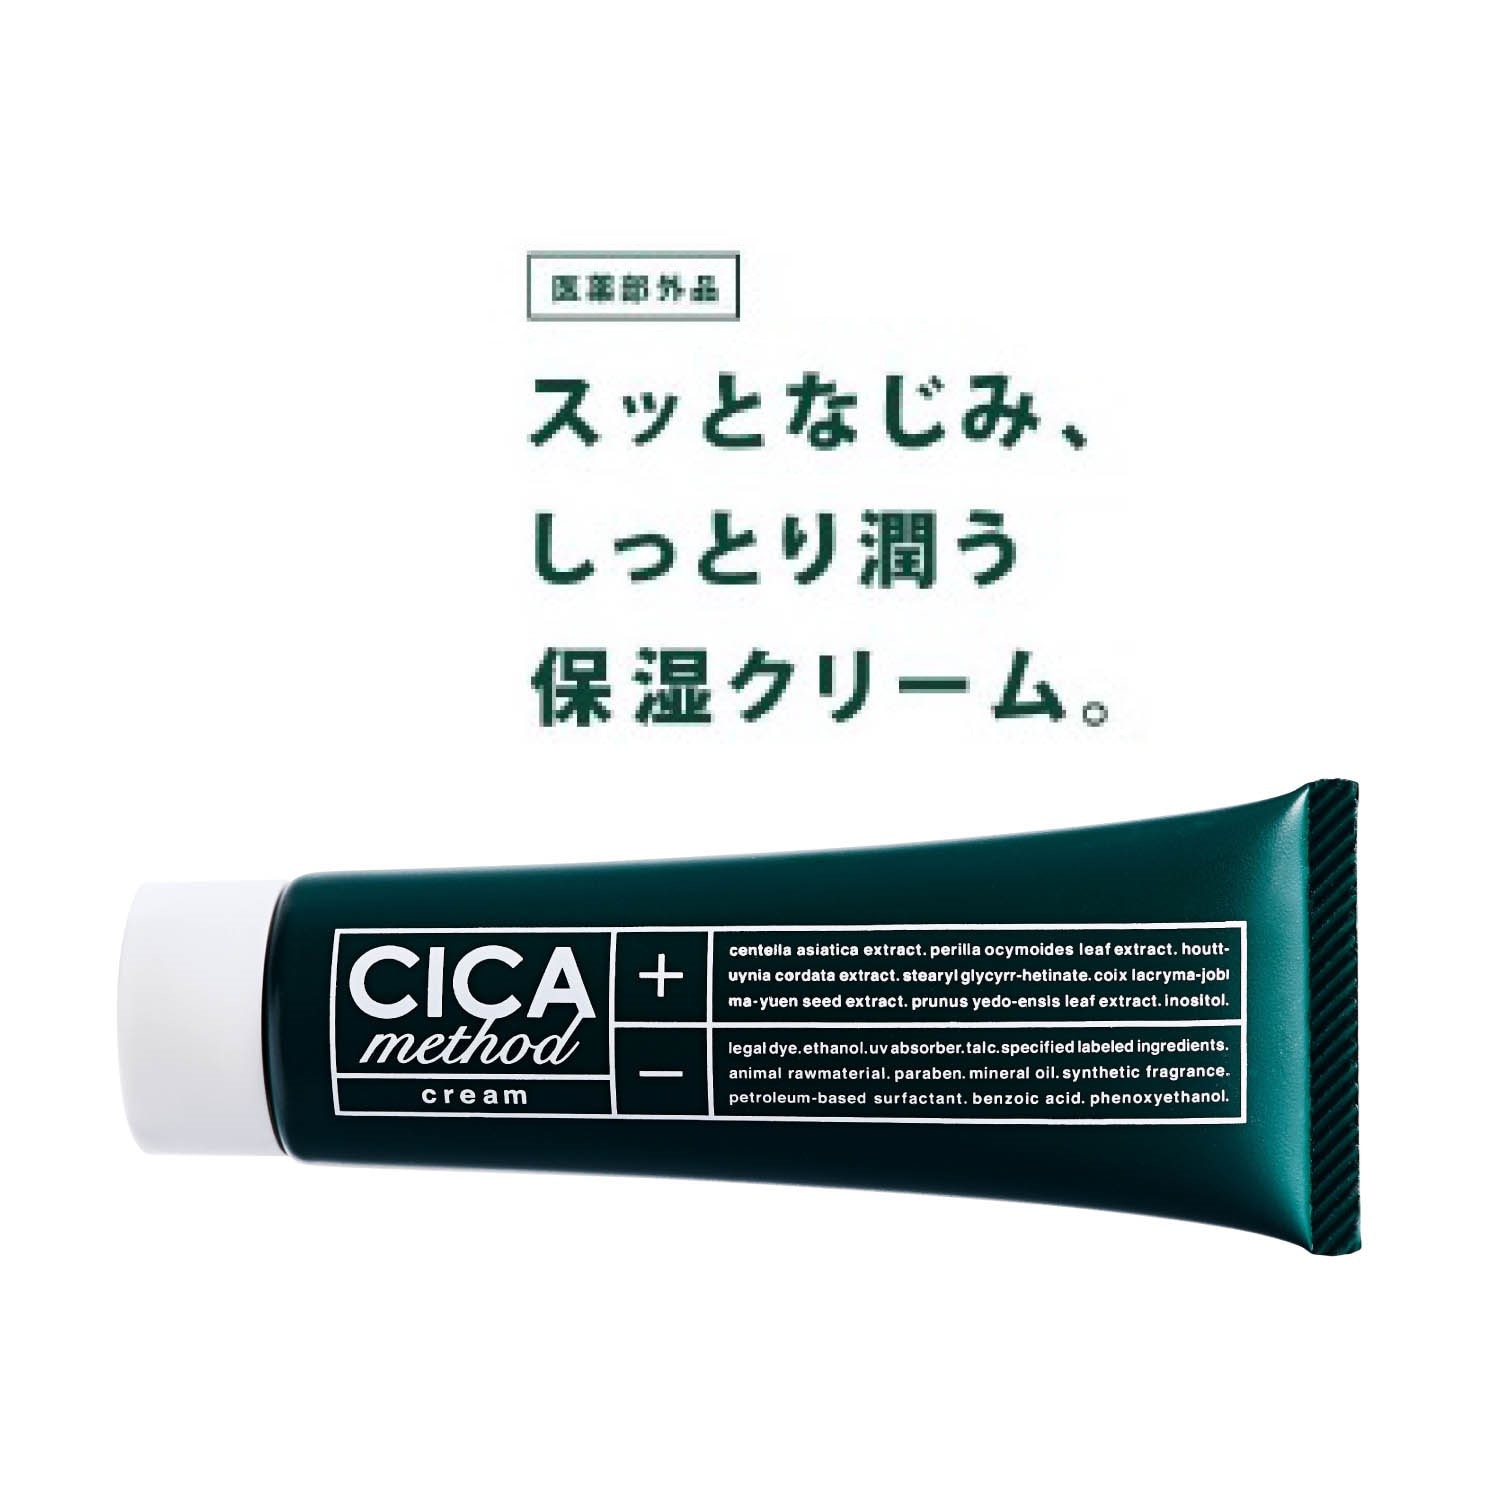 ★ CICA 薬用クリームCI - 1